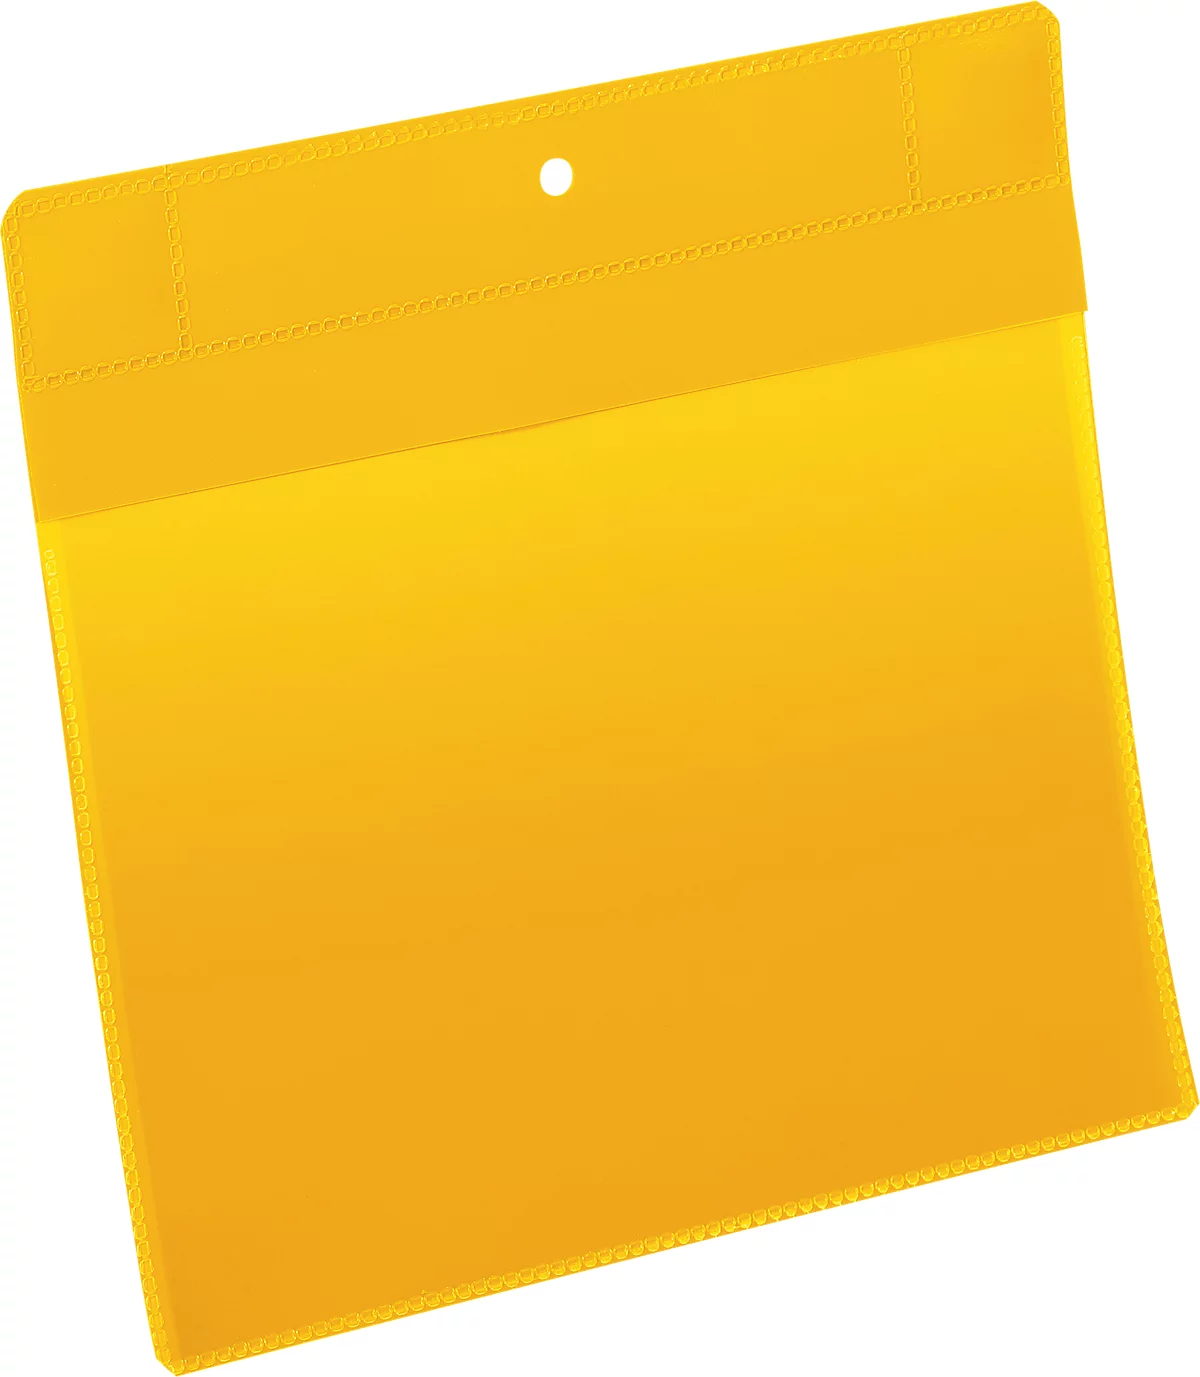 Fundas magnéticas de neodimio An 210 x Al 148 mm (A5 transversal), 10 unidades, amarillo